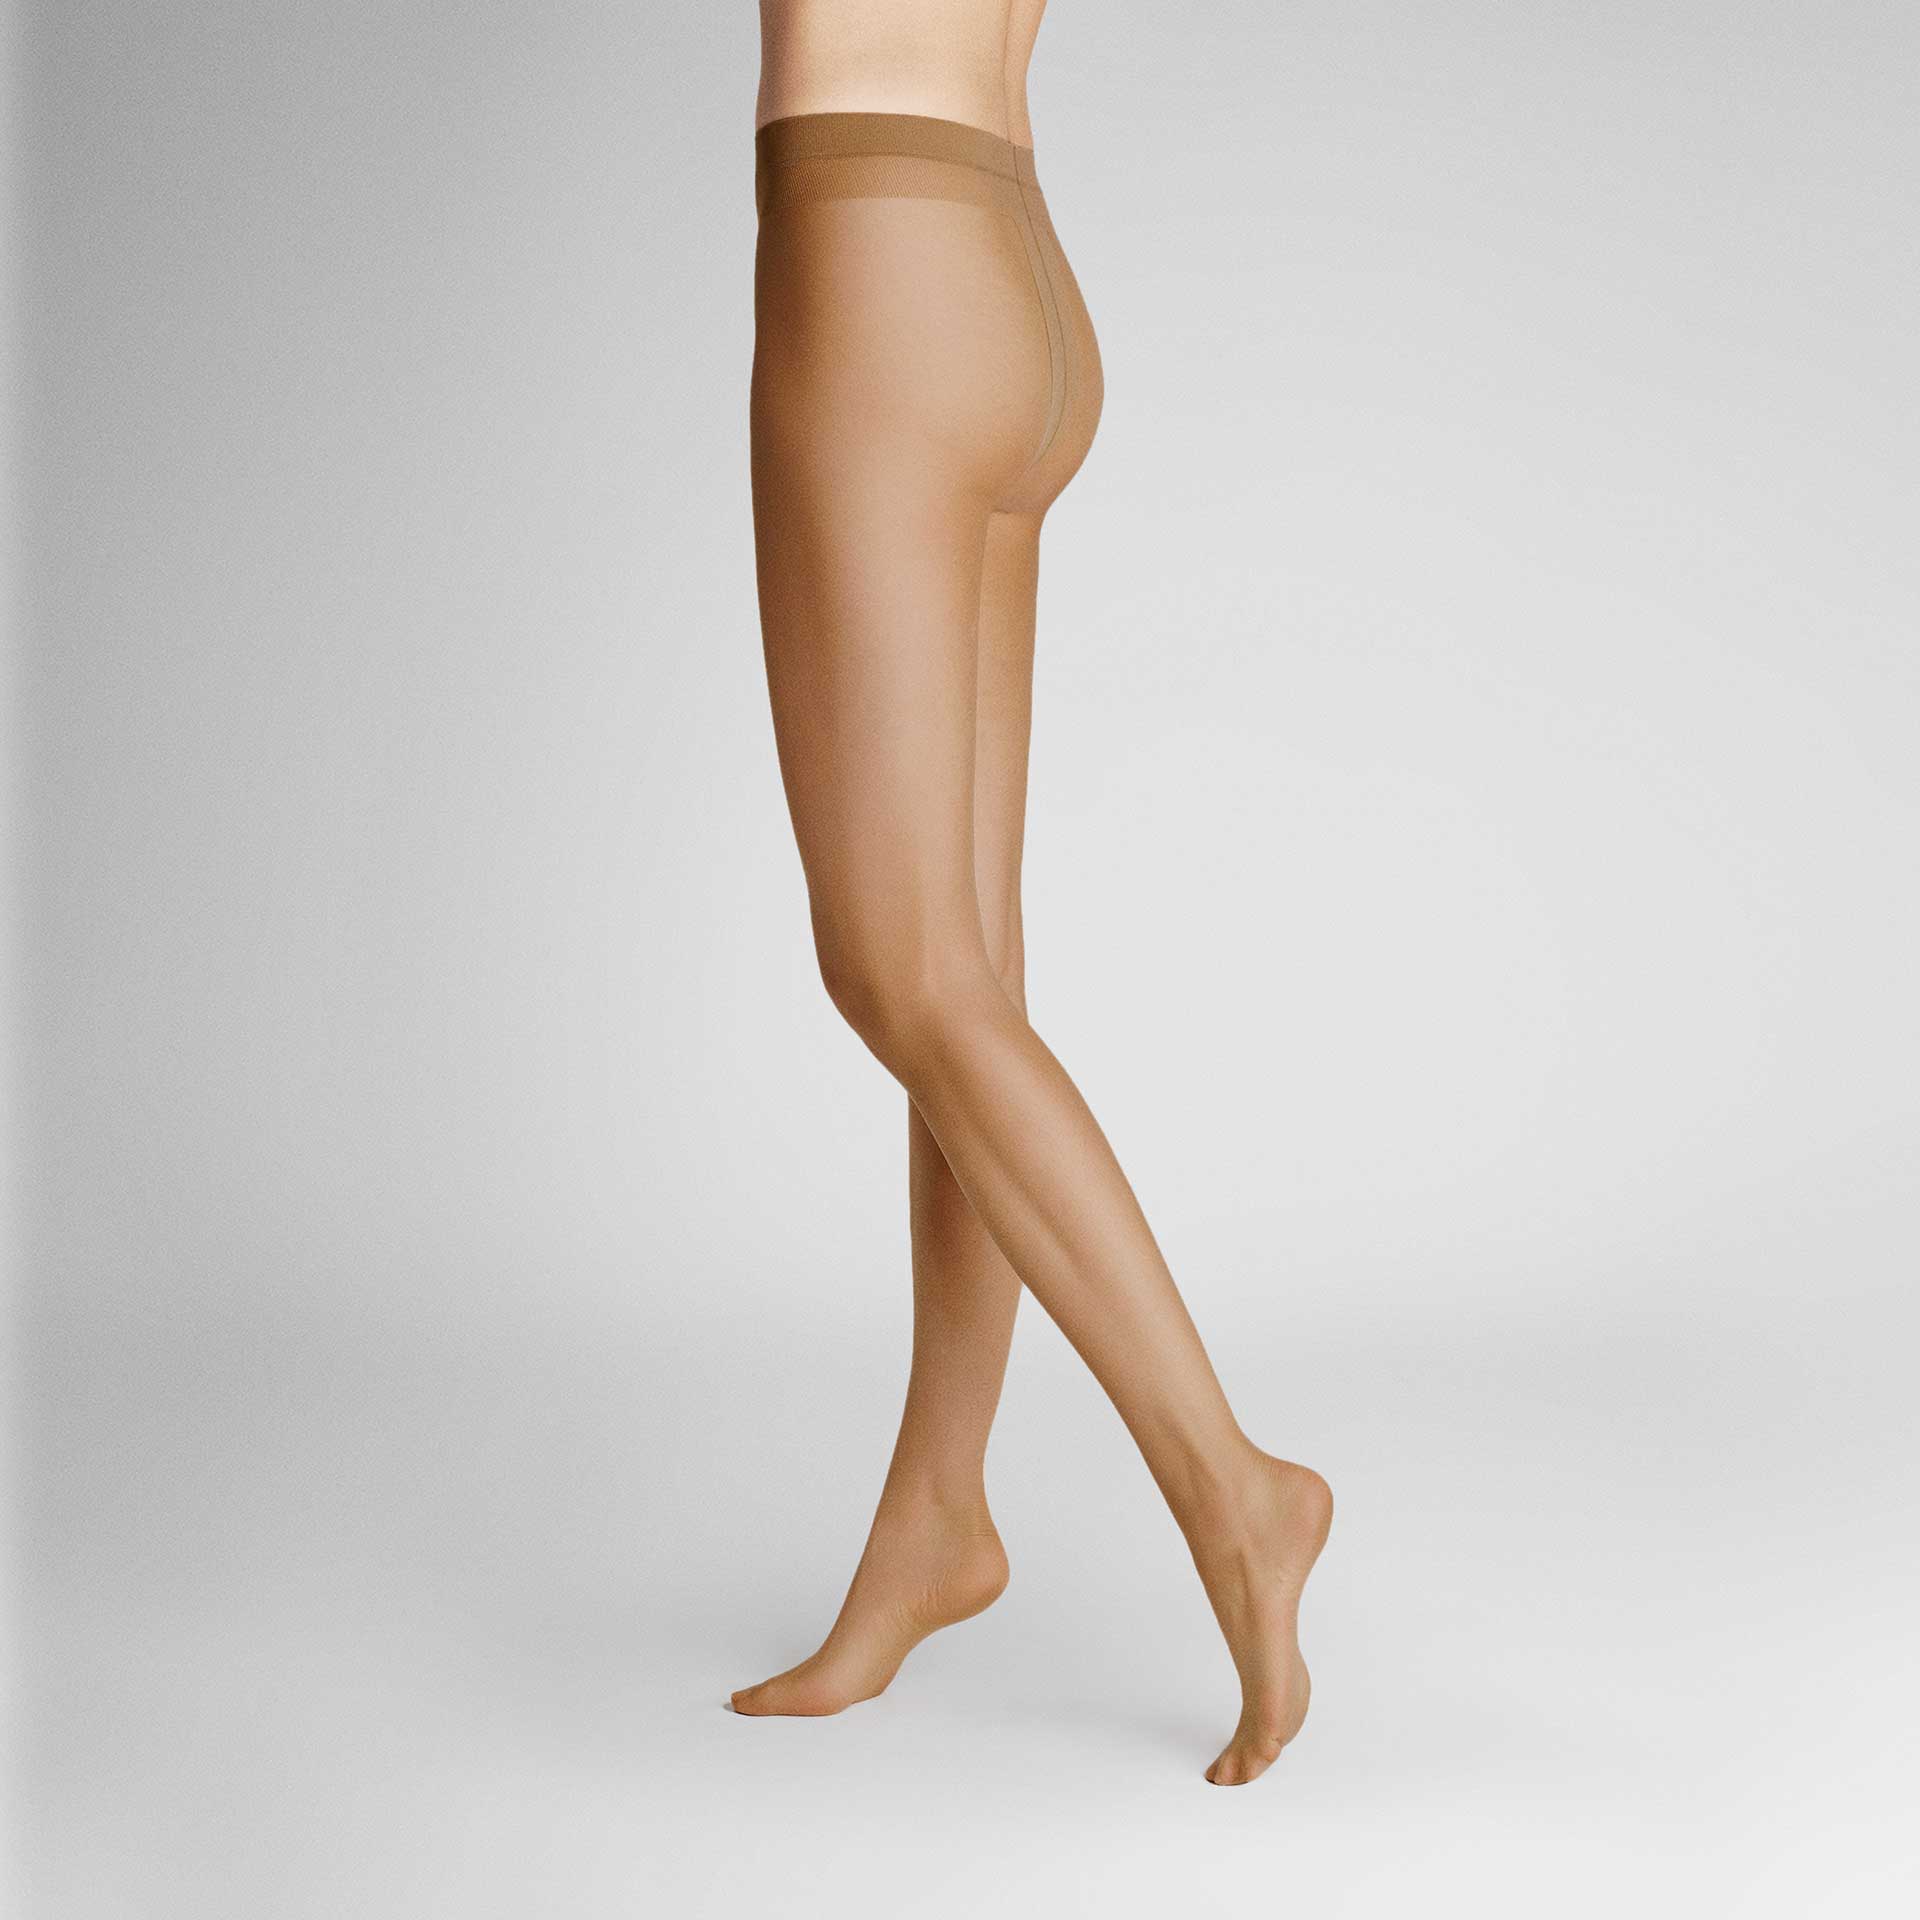 HUDSON Damen LIGHT 8 -  44/46 - Strumpfhose im perfekten Nude-Look - Brasil (Dunkel Beige)